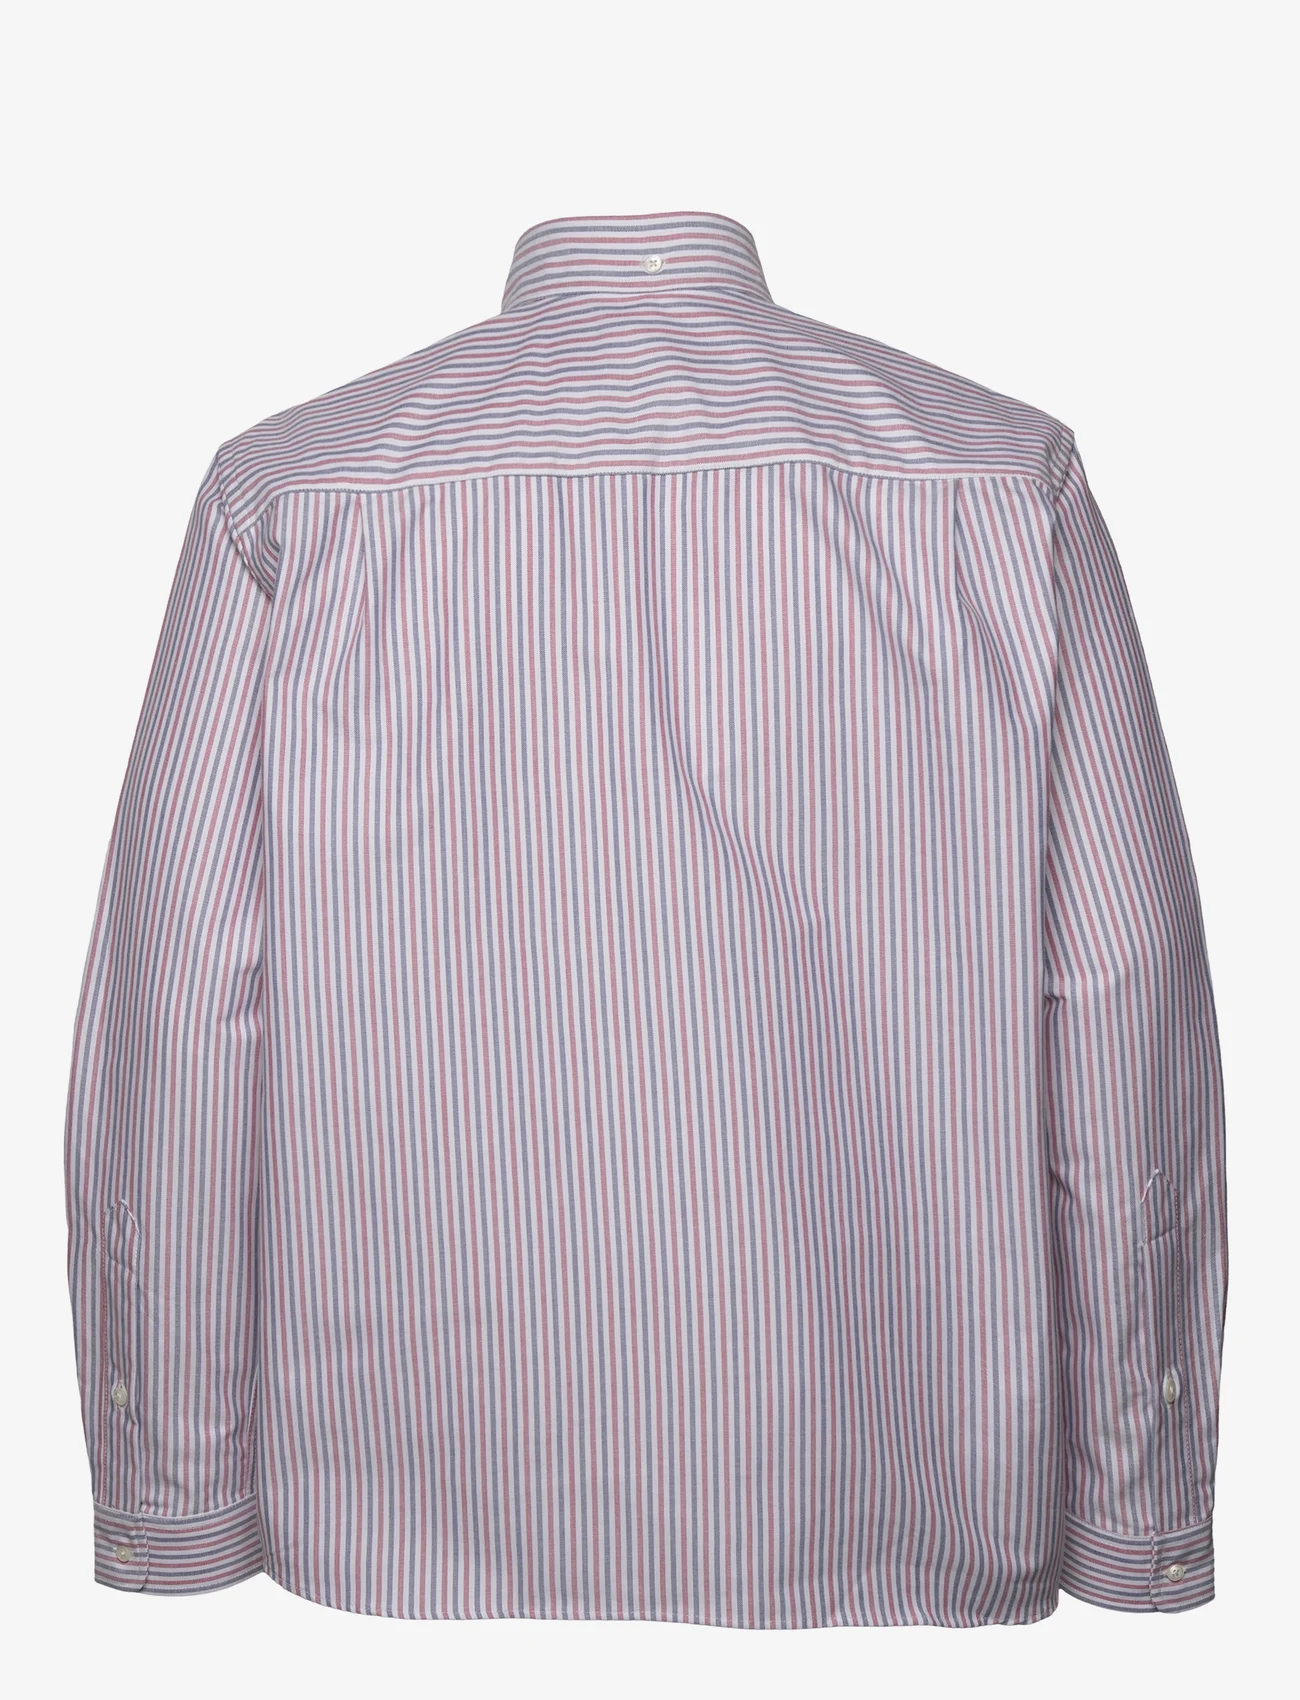 Schnayderman's - SHIRT BD NON-BINARY EMBROIDERY - kasdienio stiliaus marškiniai - red, white and navy - 1